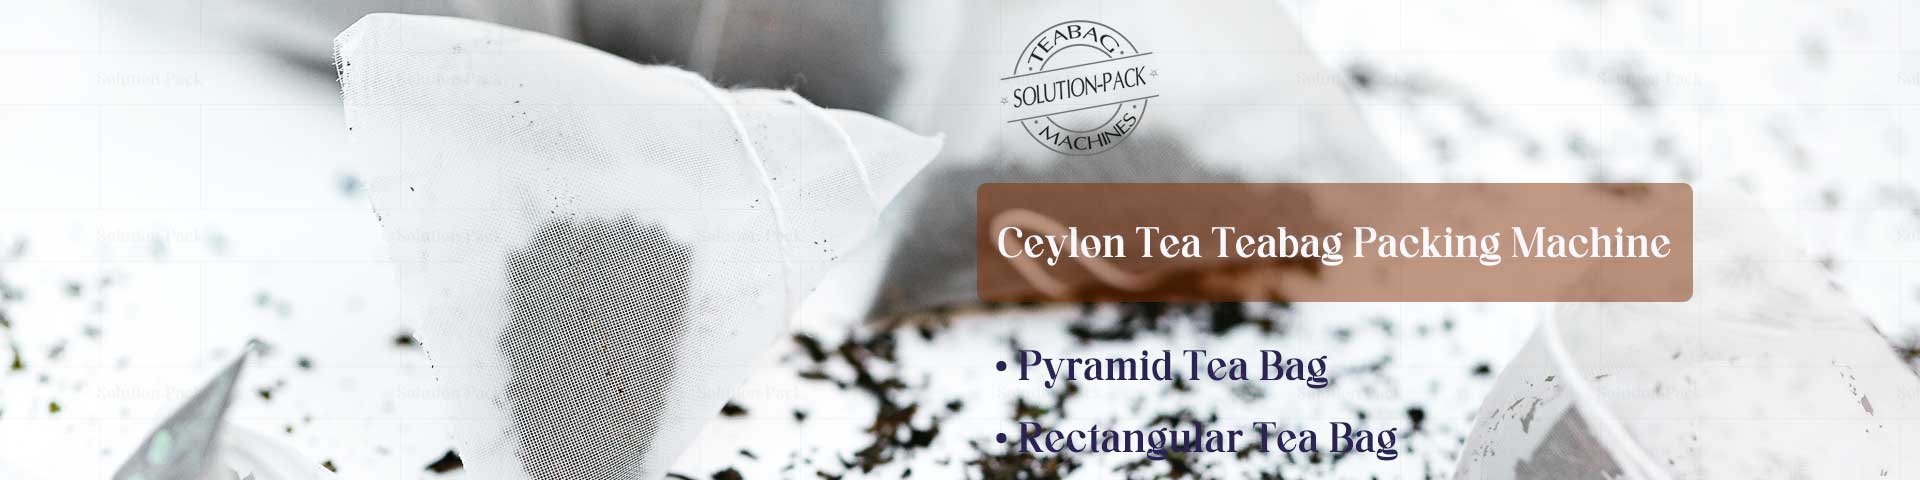 Ceylon Tea Packing Machine | Pyramid Tea Bag | Economic Tea Bag Packing Machine | Best China Teabag Machine